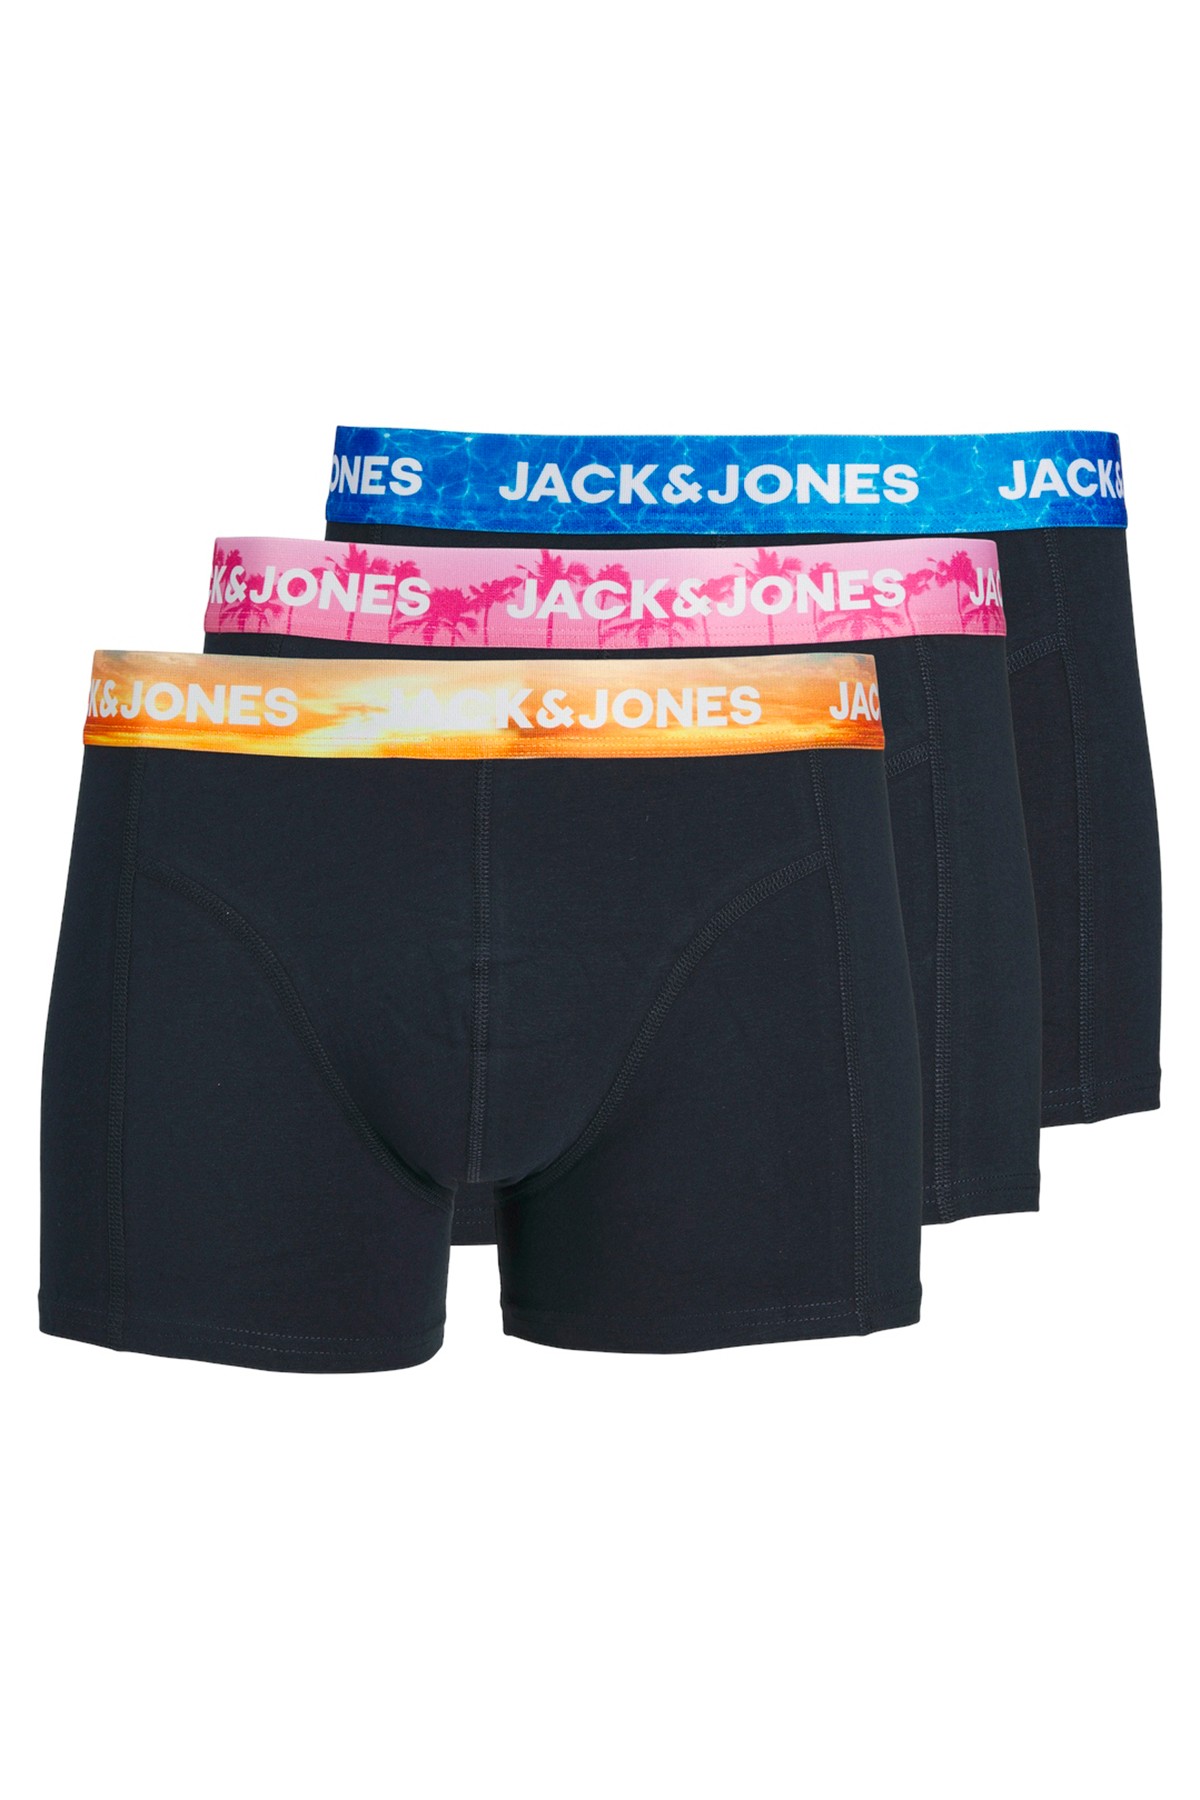 Jack & Jones Jacluca Solid Erkek Boxer 3'lü Paket 12255810